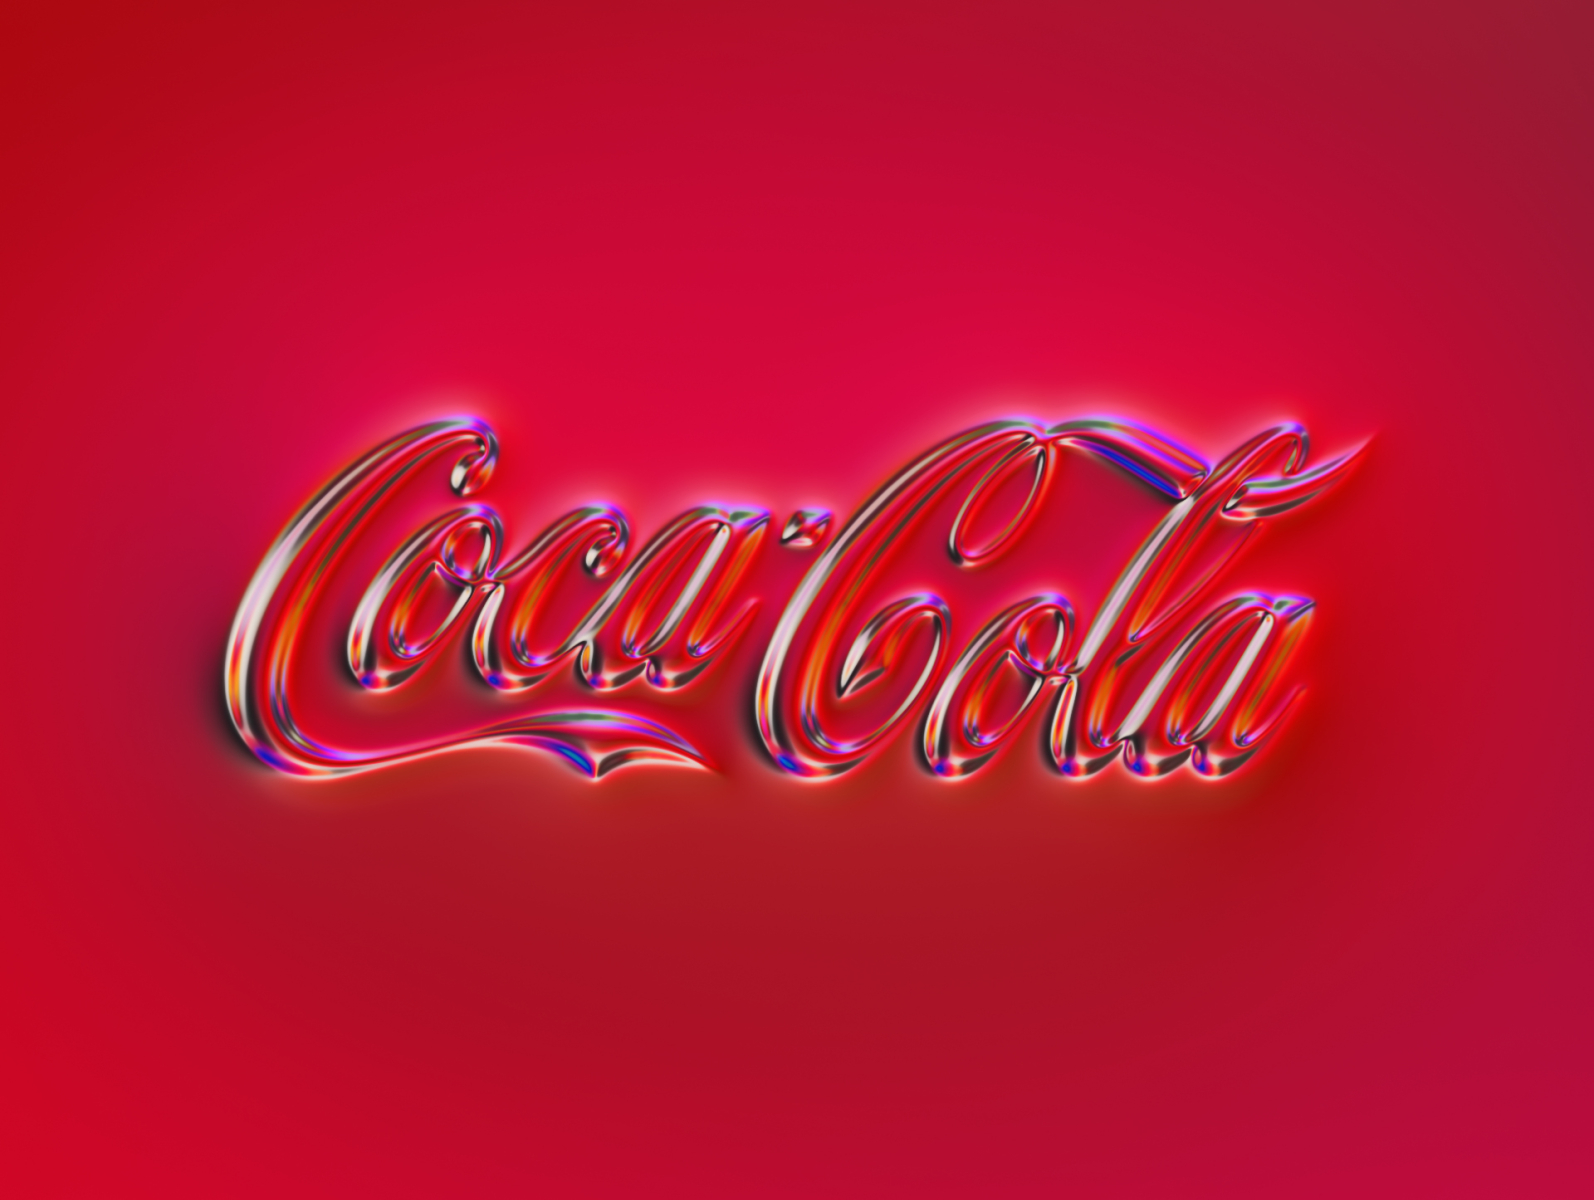 36 logos Coca Cola by Martin Naumann on Dribbble